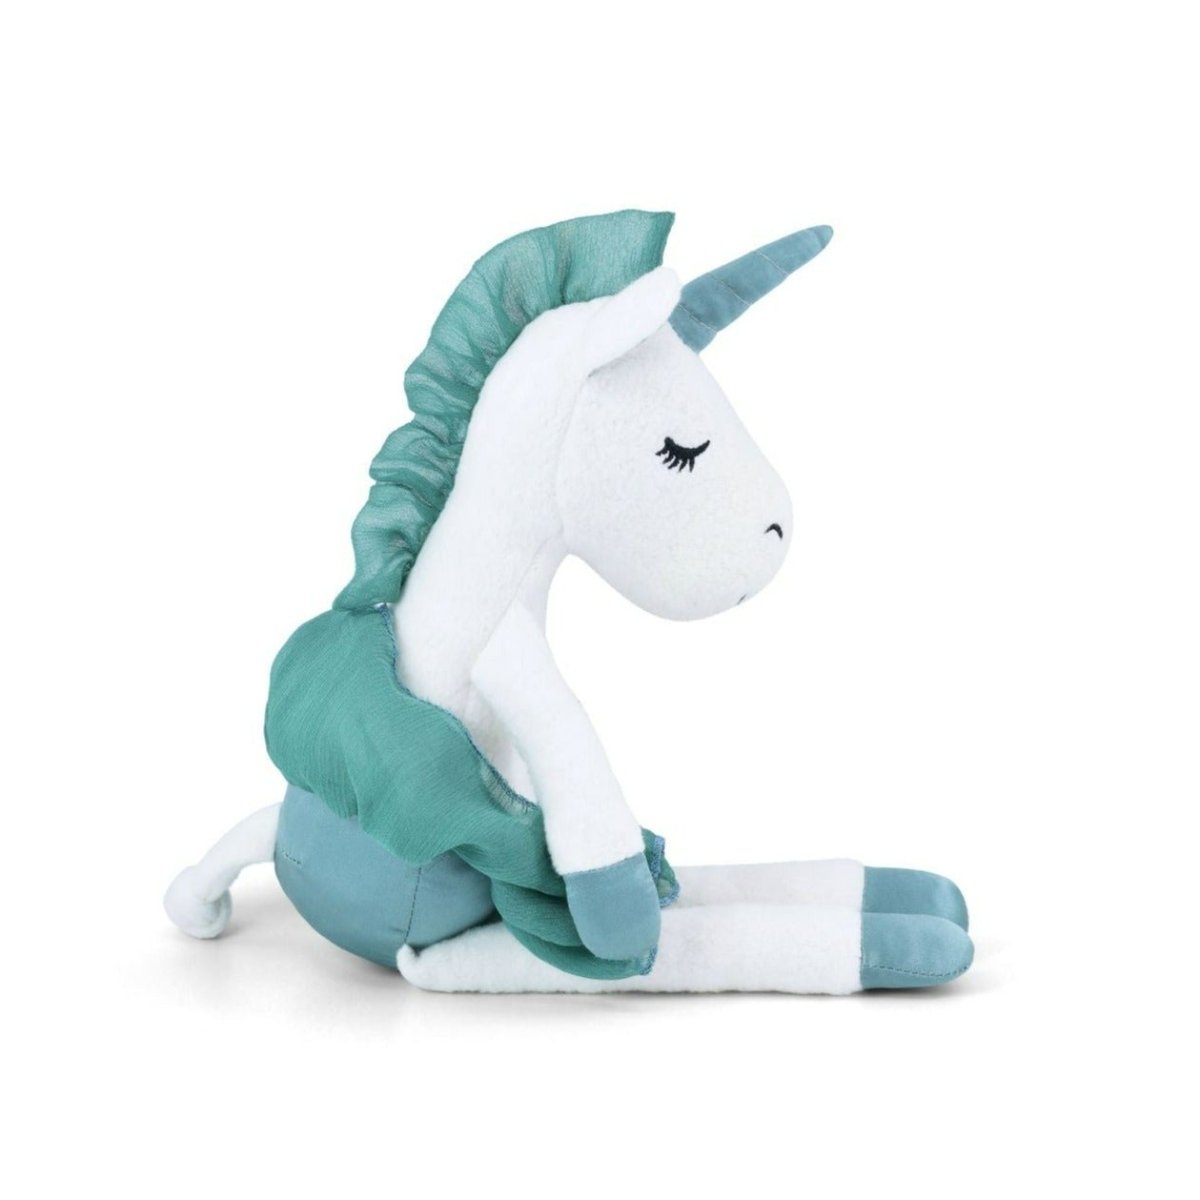 Small Unicorn Plush Toy | Apple Park | Suffies - Bee Like Kids